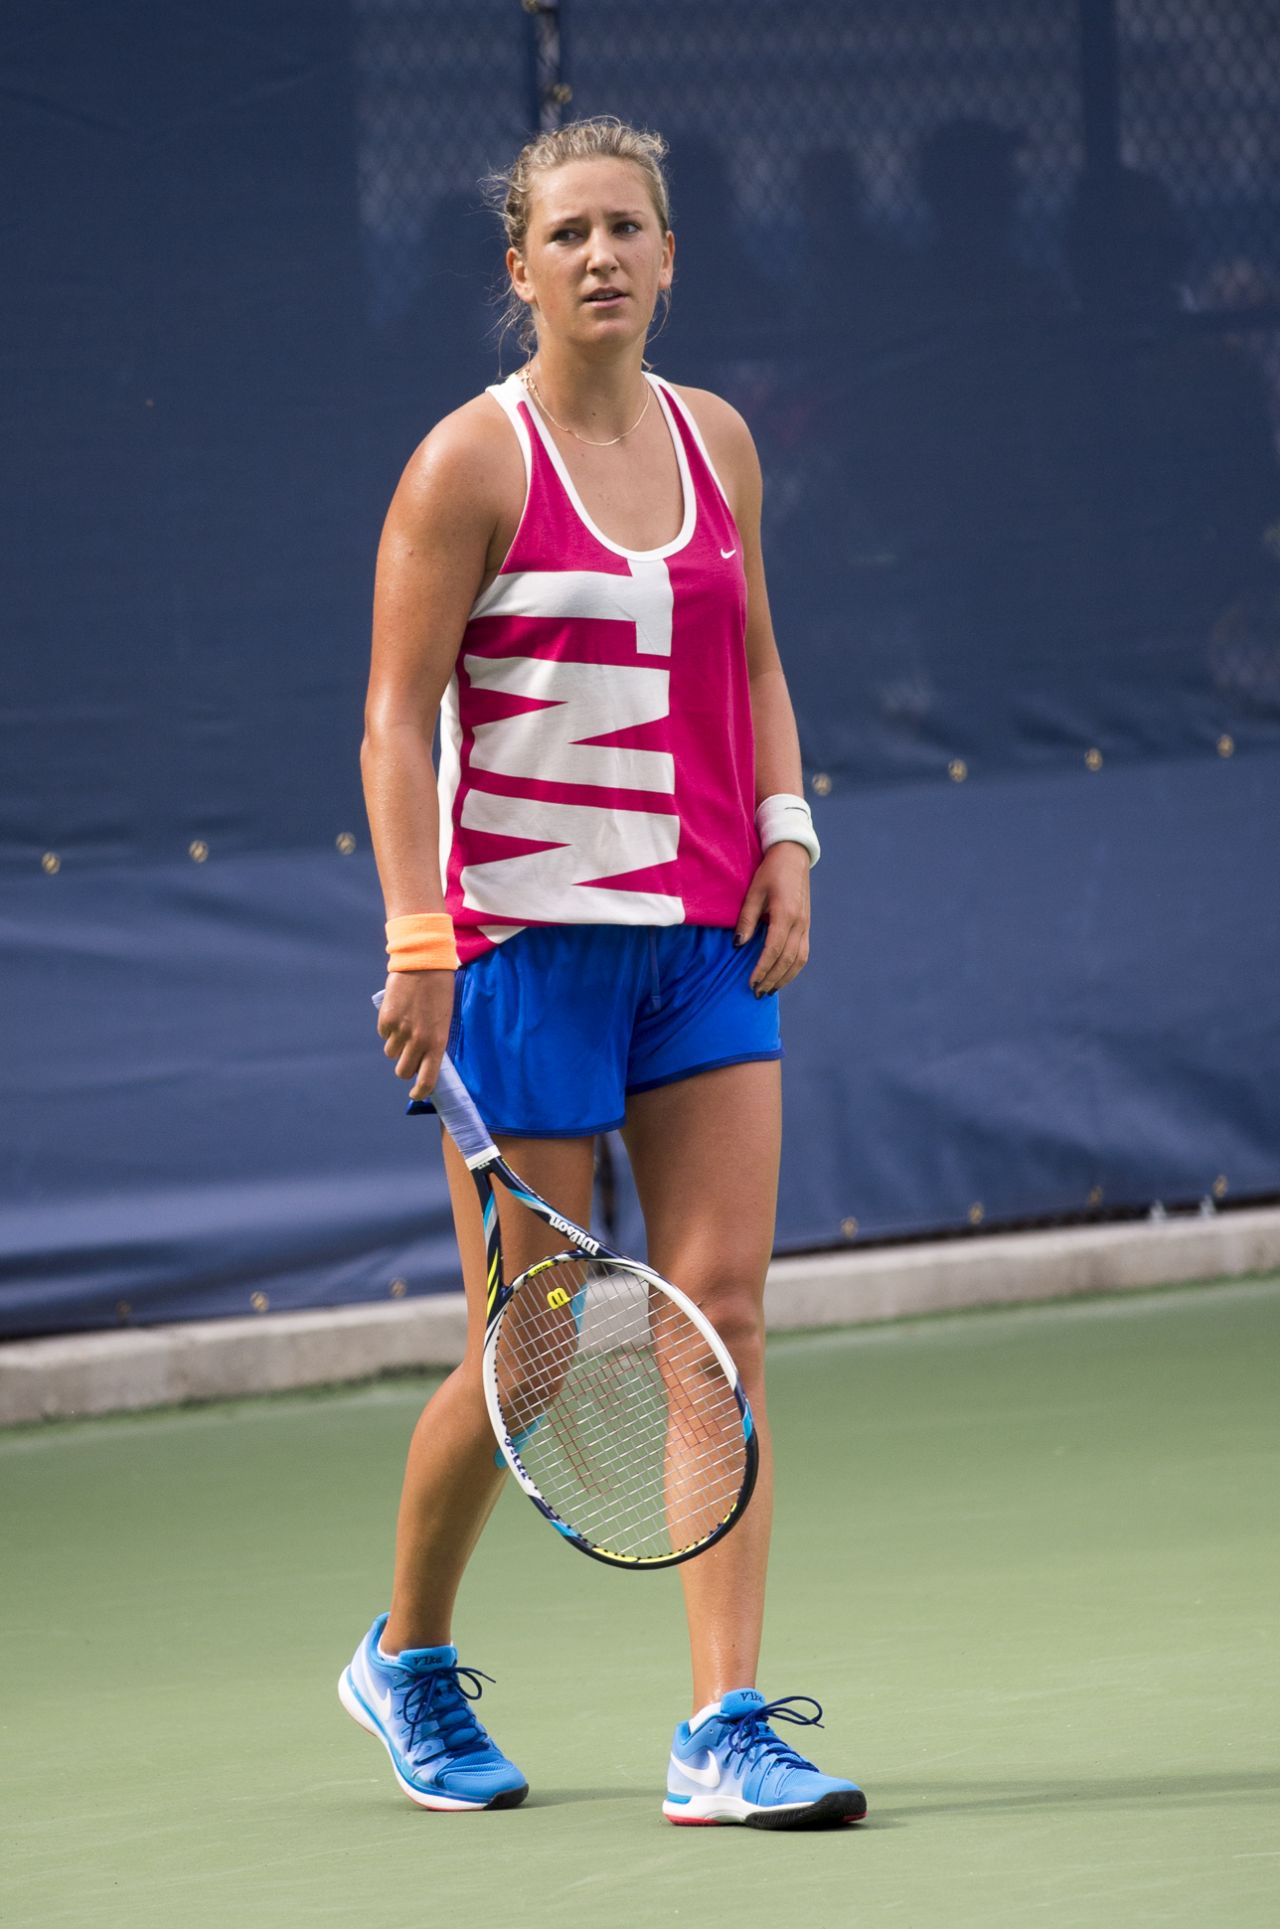 Victoria Azarenka Practice at the 2014 US Open in New York City